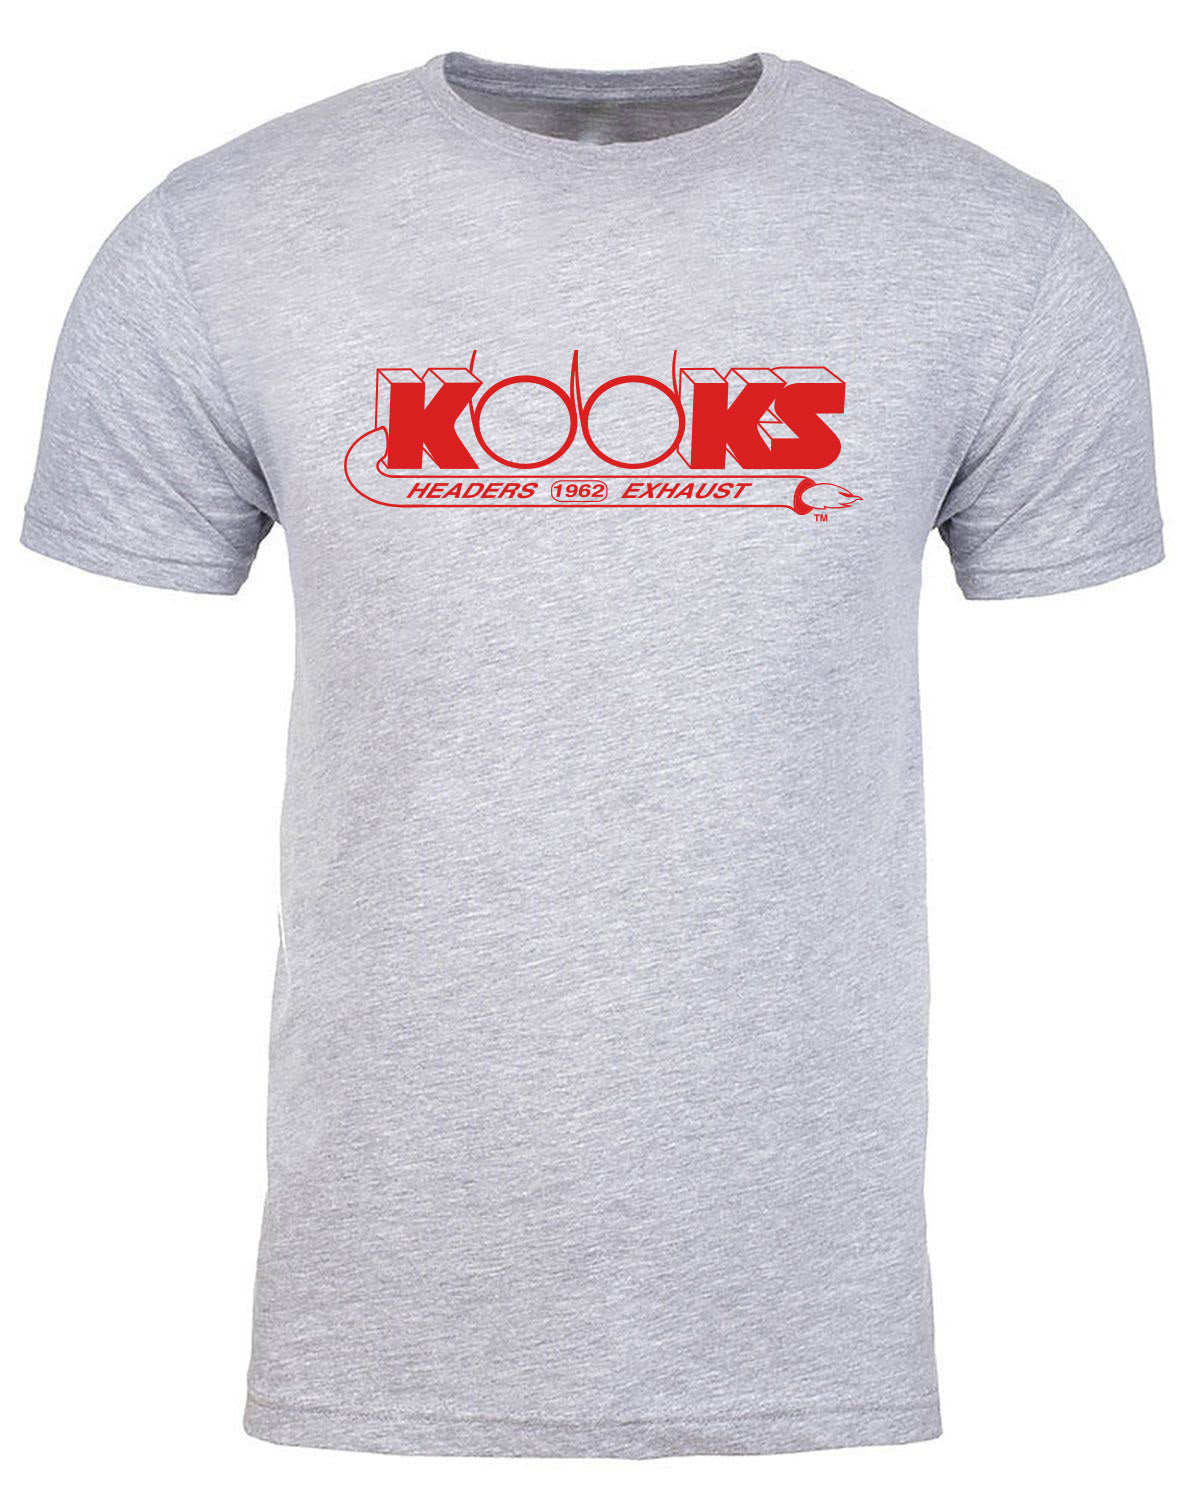 Kooks Custom Headers T-Shirt TS-100647-03